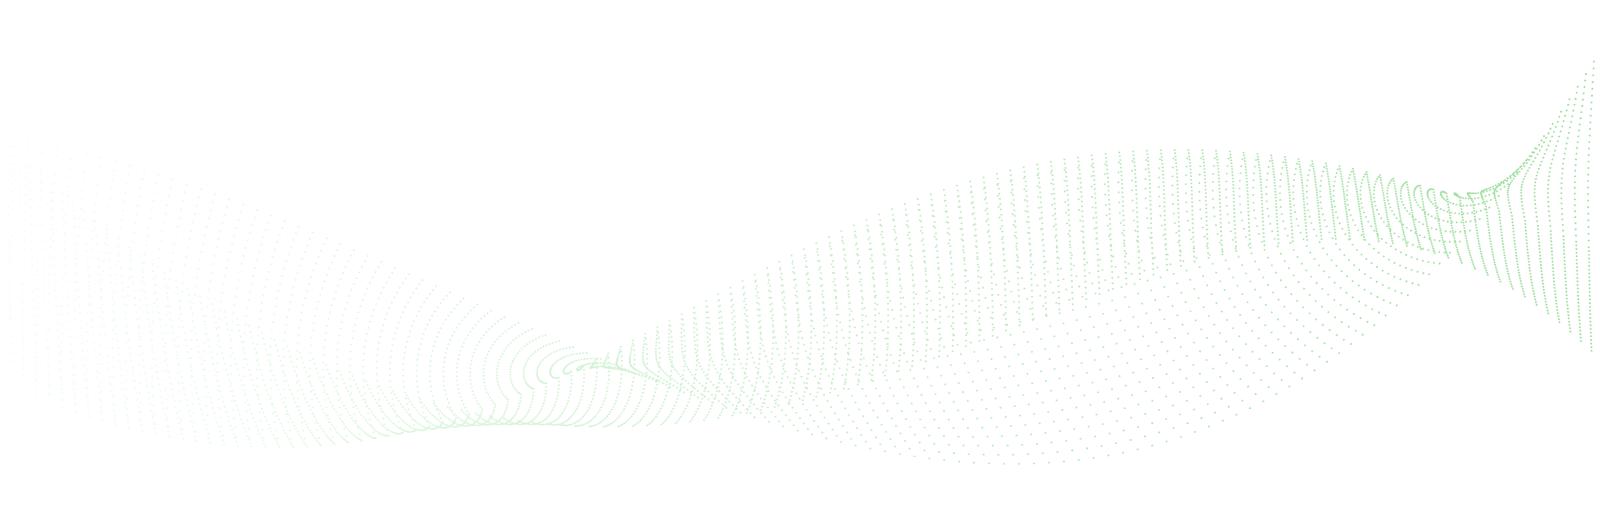 Green wave shaped background image